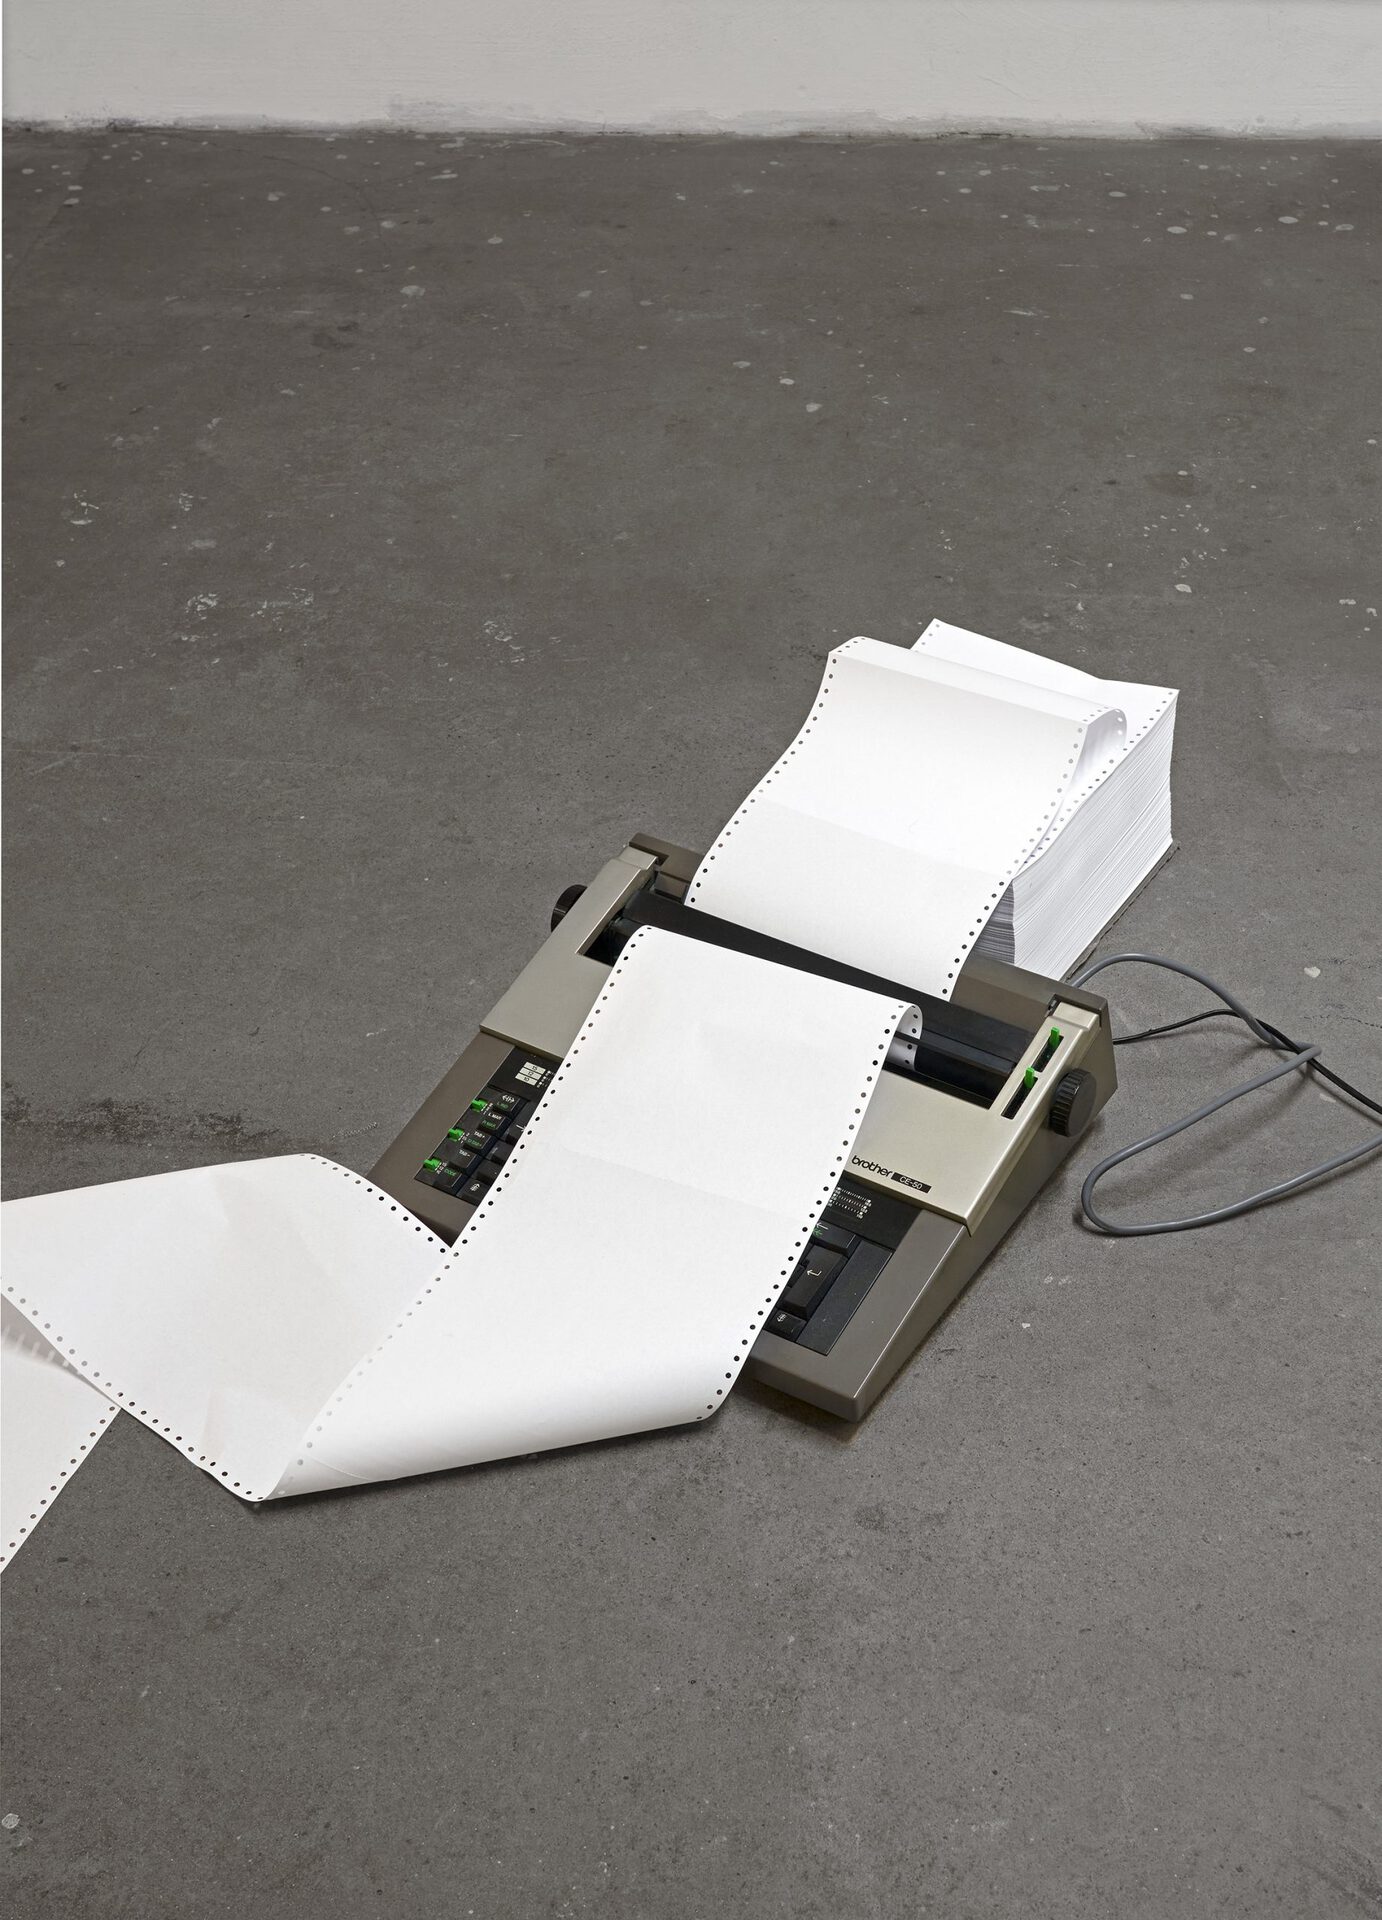 Tamara Goehringer (in collaboration with Johannes Ratz), abba, cddc, effe, 2022, typewriter, paper, raspberry pi, python 30x40 cm